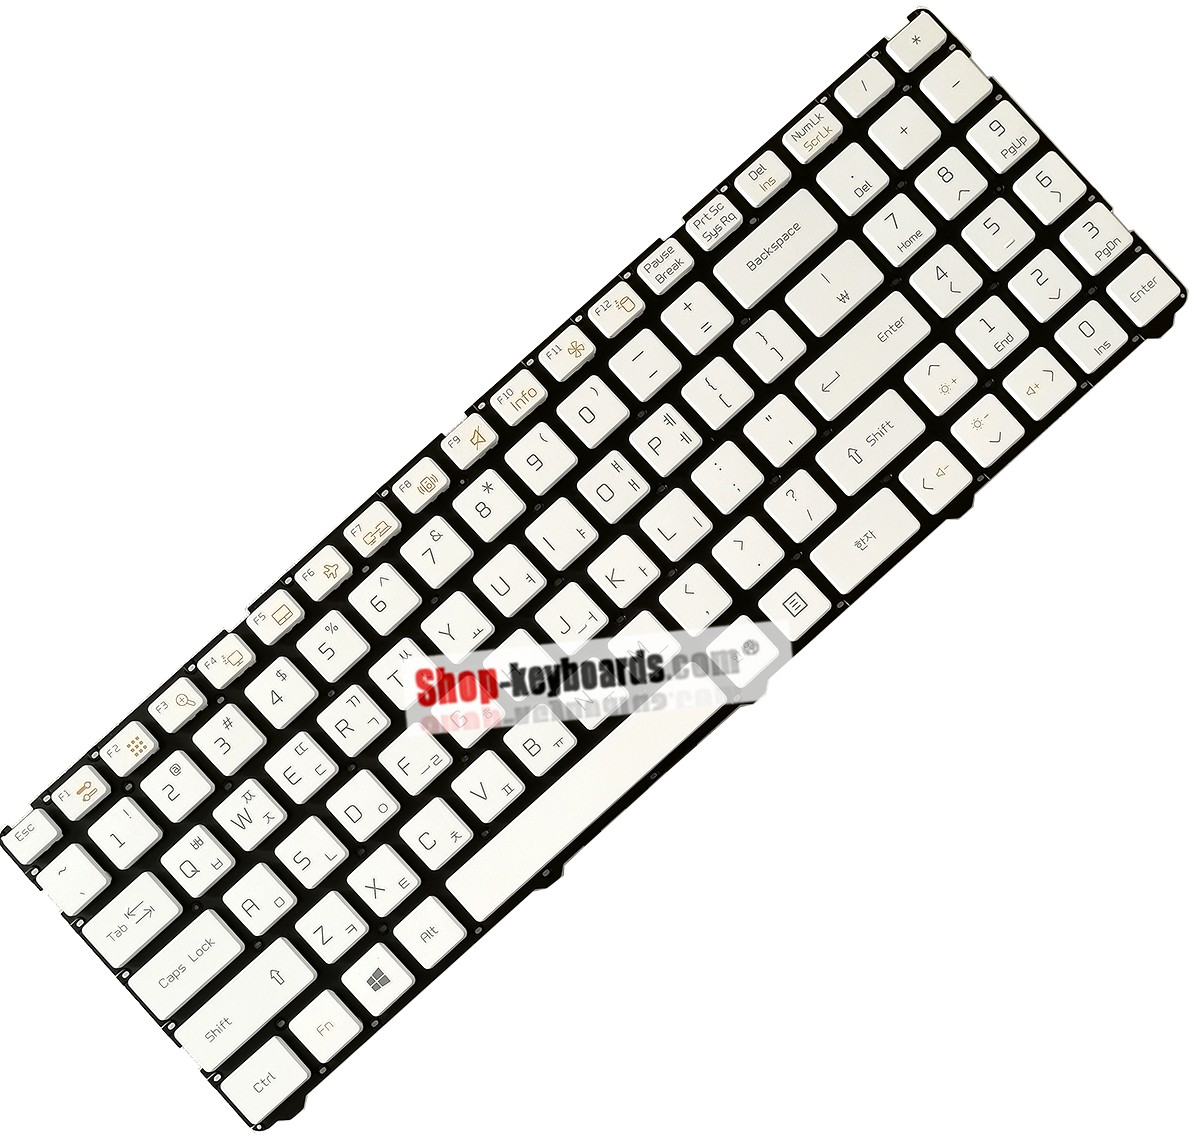 LG MP-12K73B0-9207 Keyboard replacement